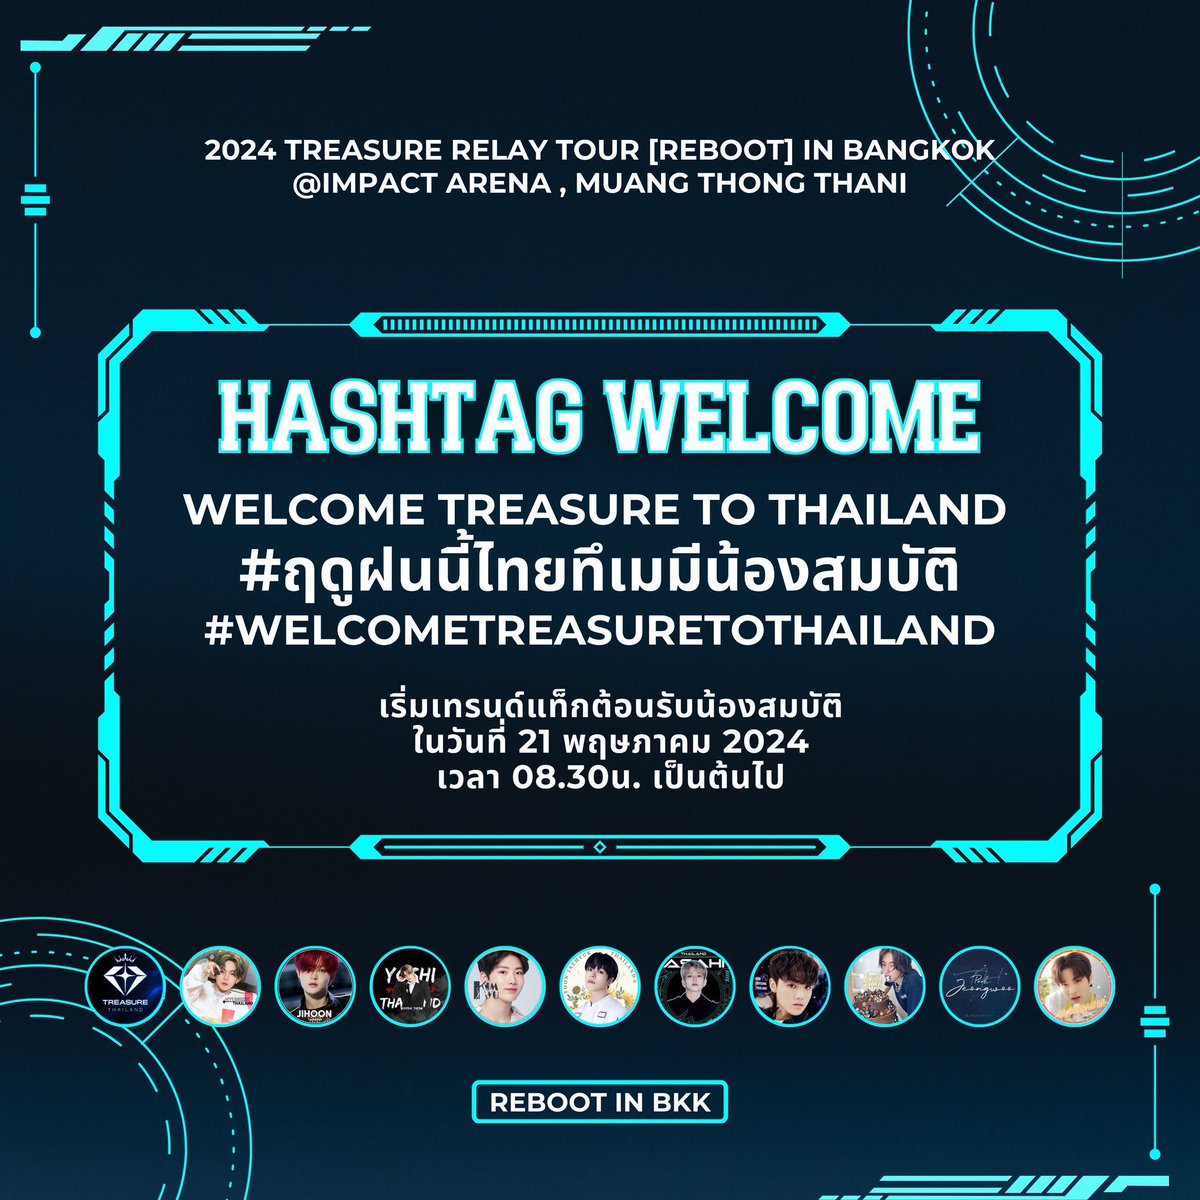 [📢] HASHTAG WELCOME TREASURE 

🔔 พรุ่งนี้ (วันที่ 21 พ.ค.) ตั้งแต่เวลา 08.30 น. (เวลาไทย) ขอเชิญชวนทึเมชาวไทยร่วมเทรนด์แฮชแท็กต้อนรับ #TREASURE ที่กำลังเดินทางมายังประเทศไทย เพื่อแสดงคอนเสิร์ต 2024 TREASURE RELAY TOUR [REBOOT] IN BANGKOK 🇹🇭 ในครั้งนี้ค่ะ